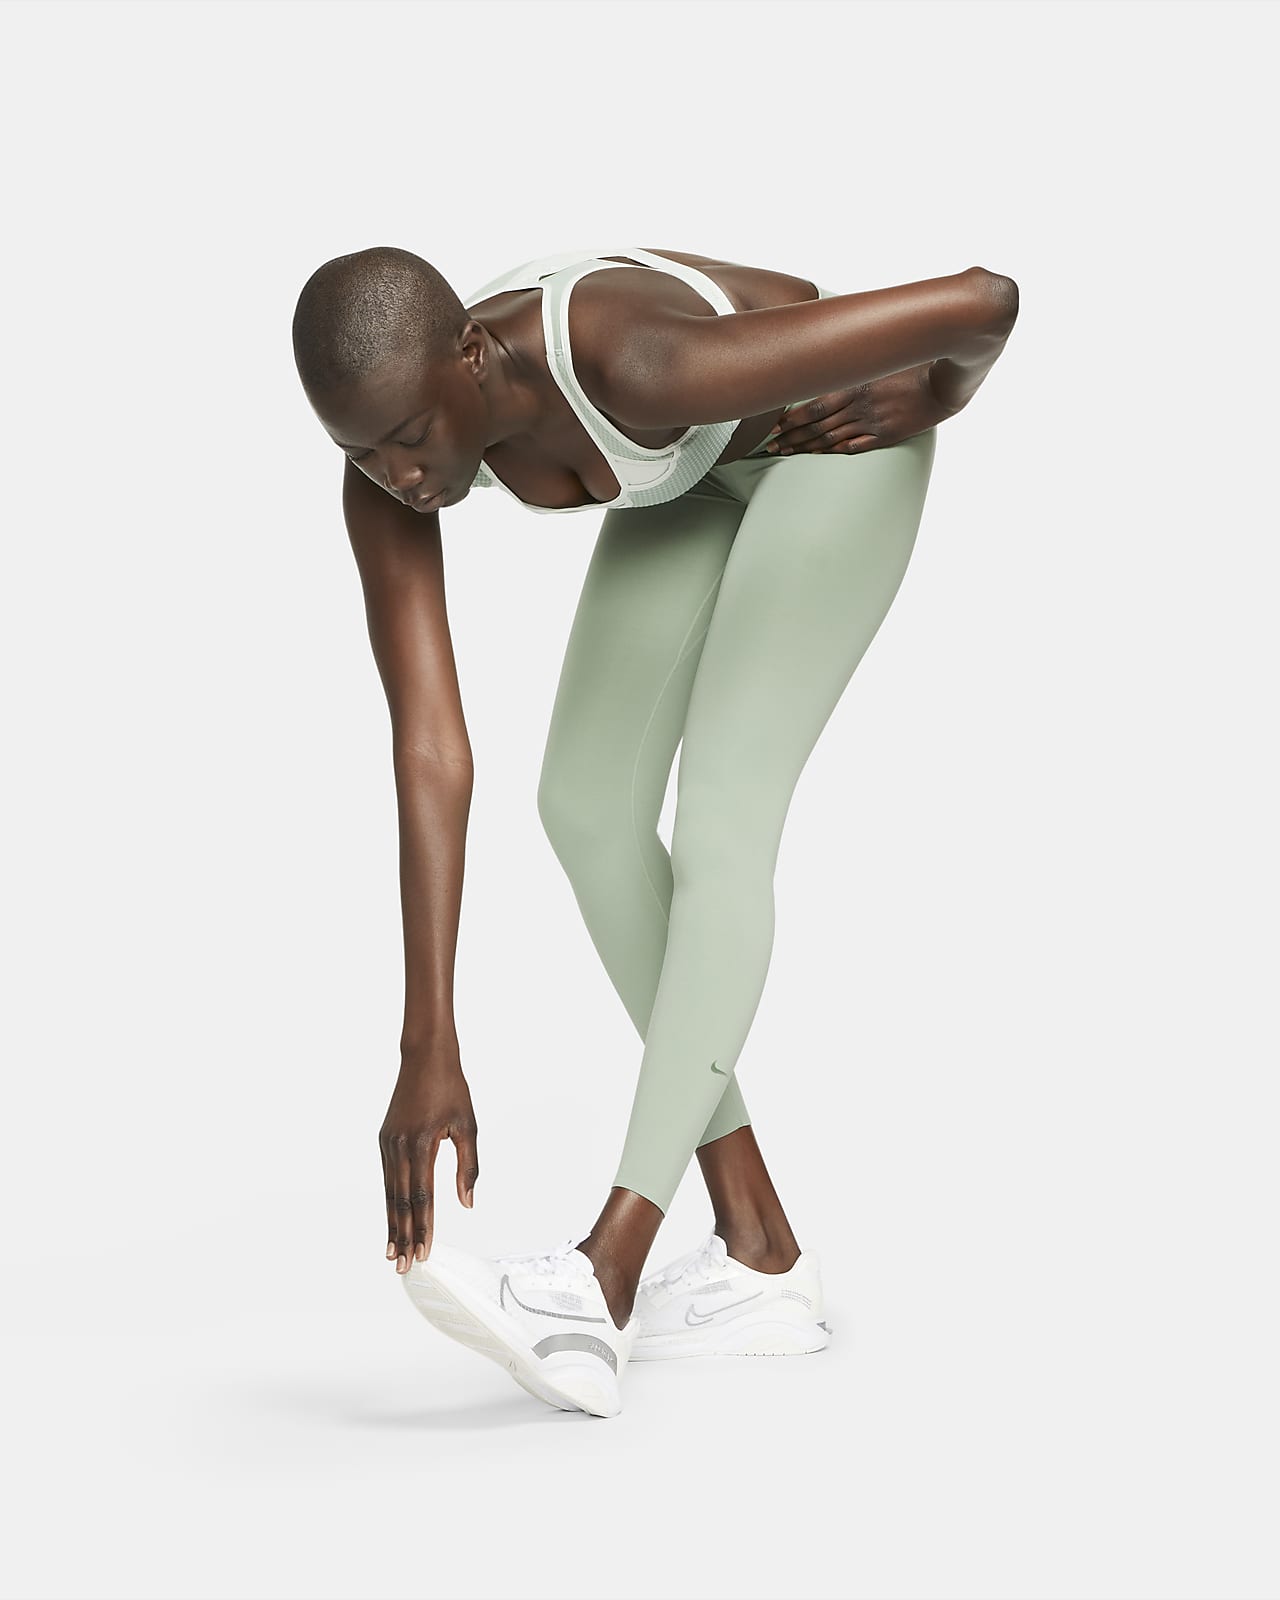 Nike One Luxe Women's Mid-Rise Leggings.